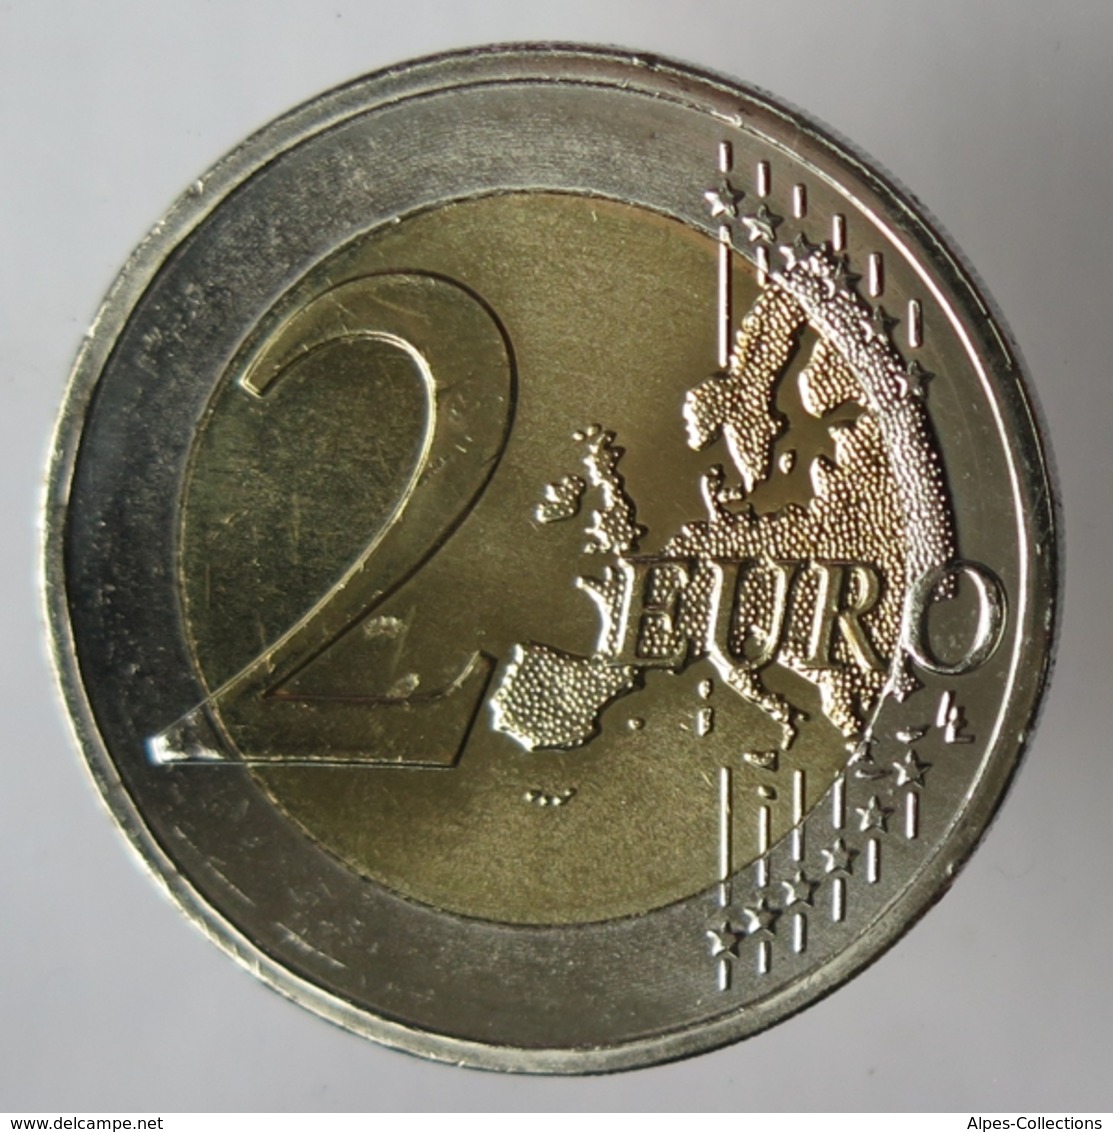 GR20015.2 - GRECE - 2 Euros Commémo. Spyros Louis - 2015 - Grèce